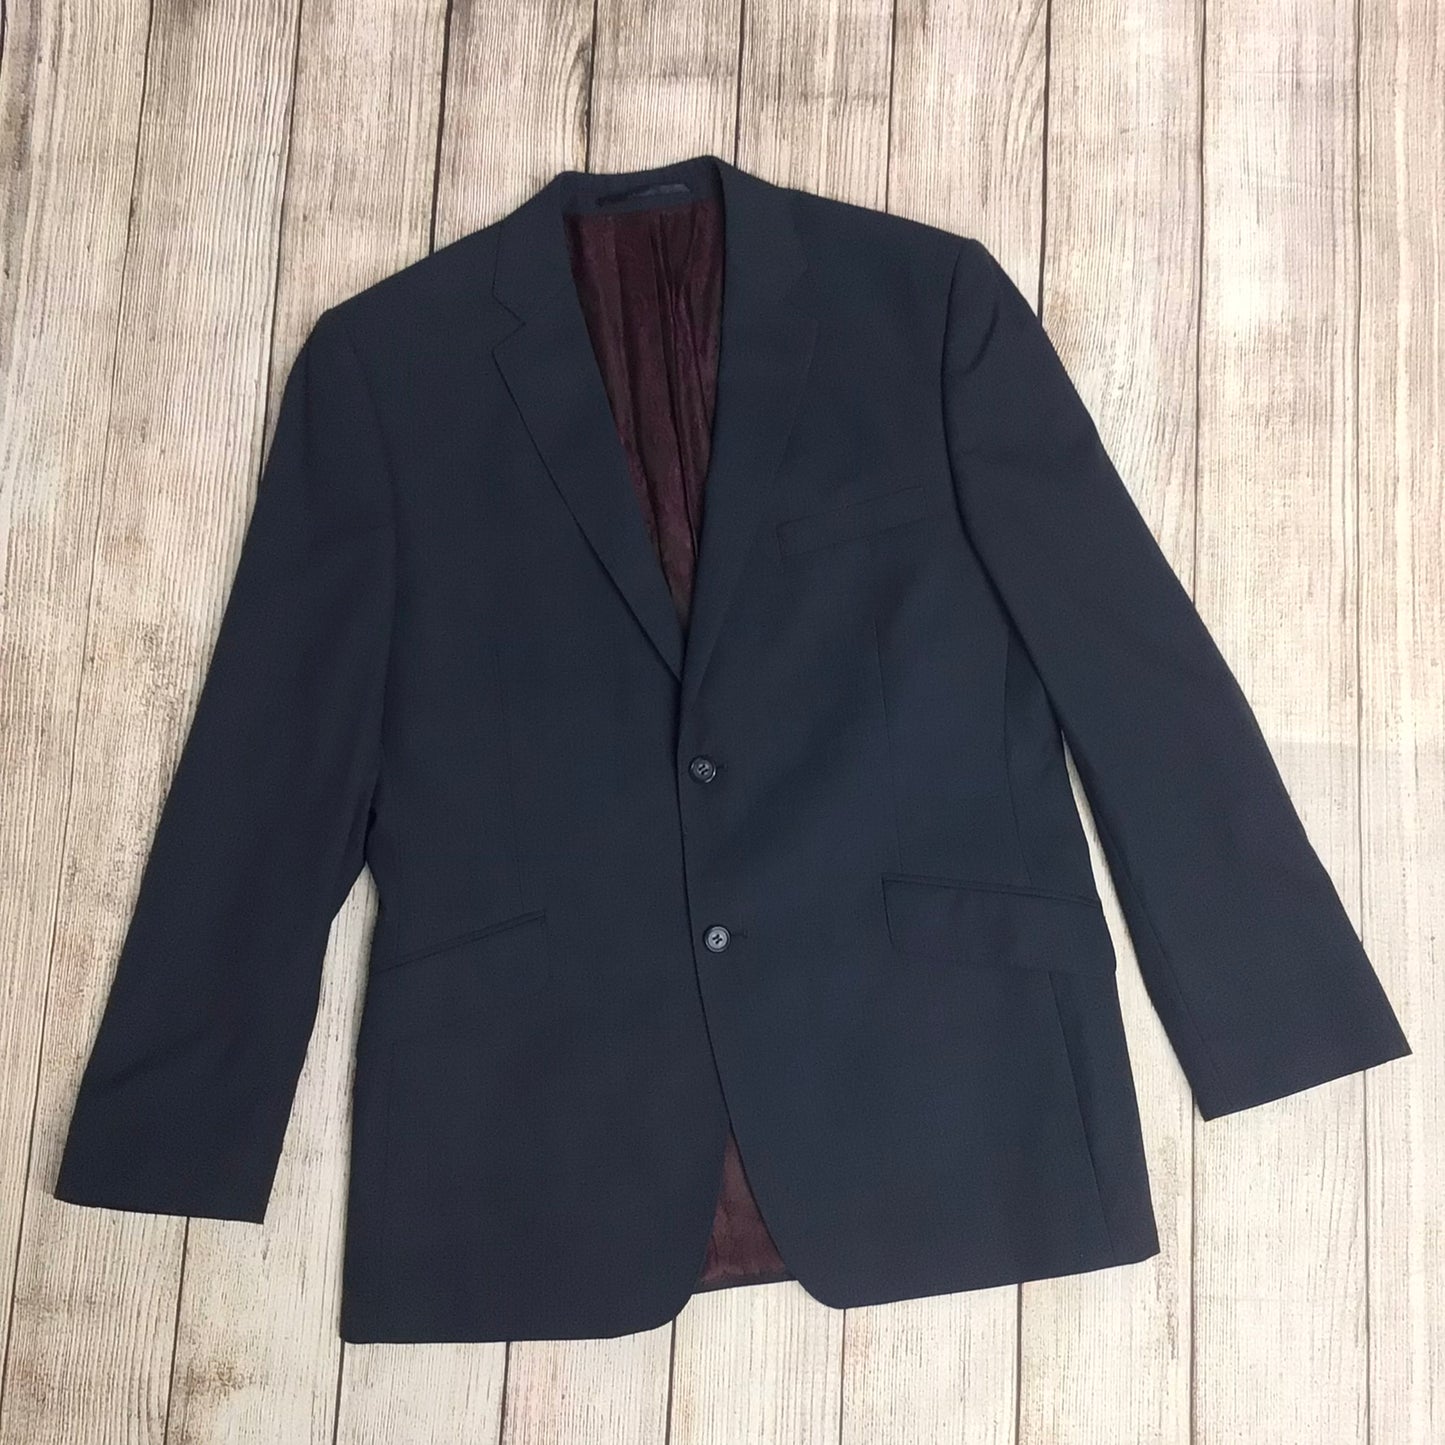 Paul Costelloe Super 120 Navy Blue Suit Jacket 100% Wool Size 42